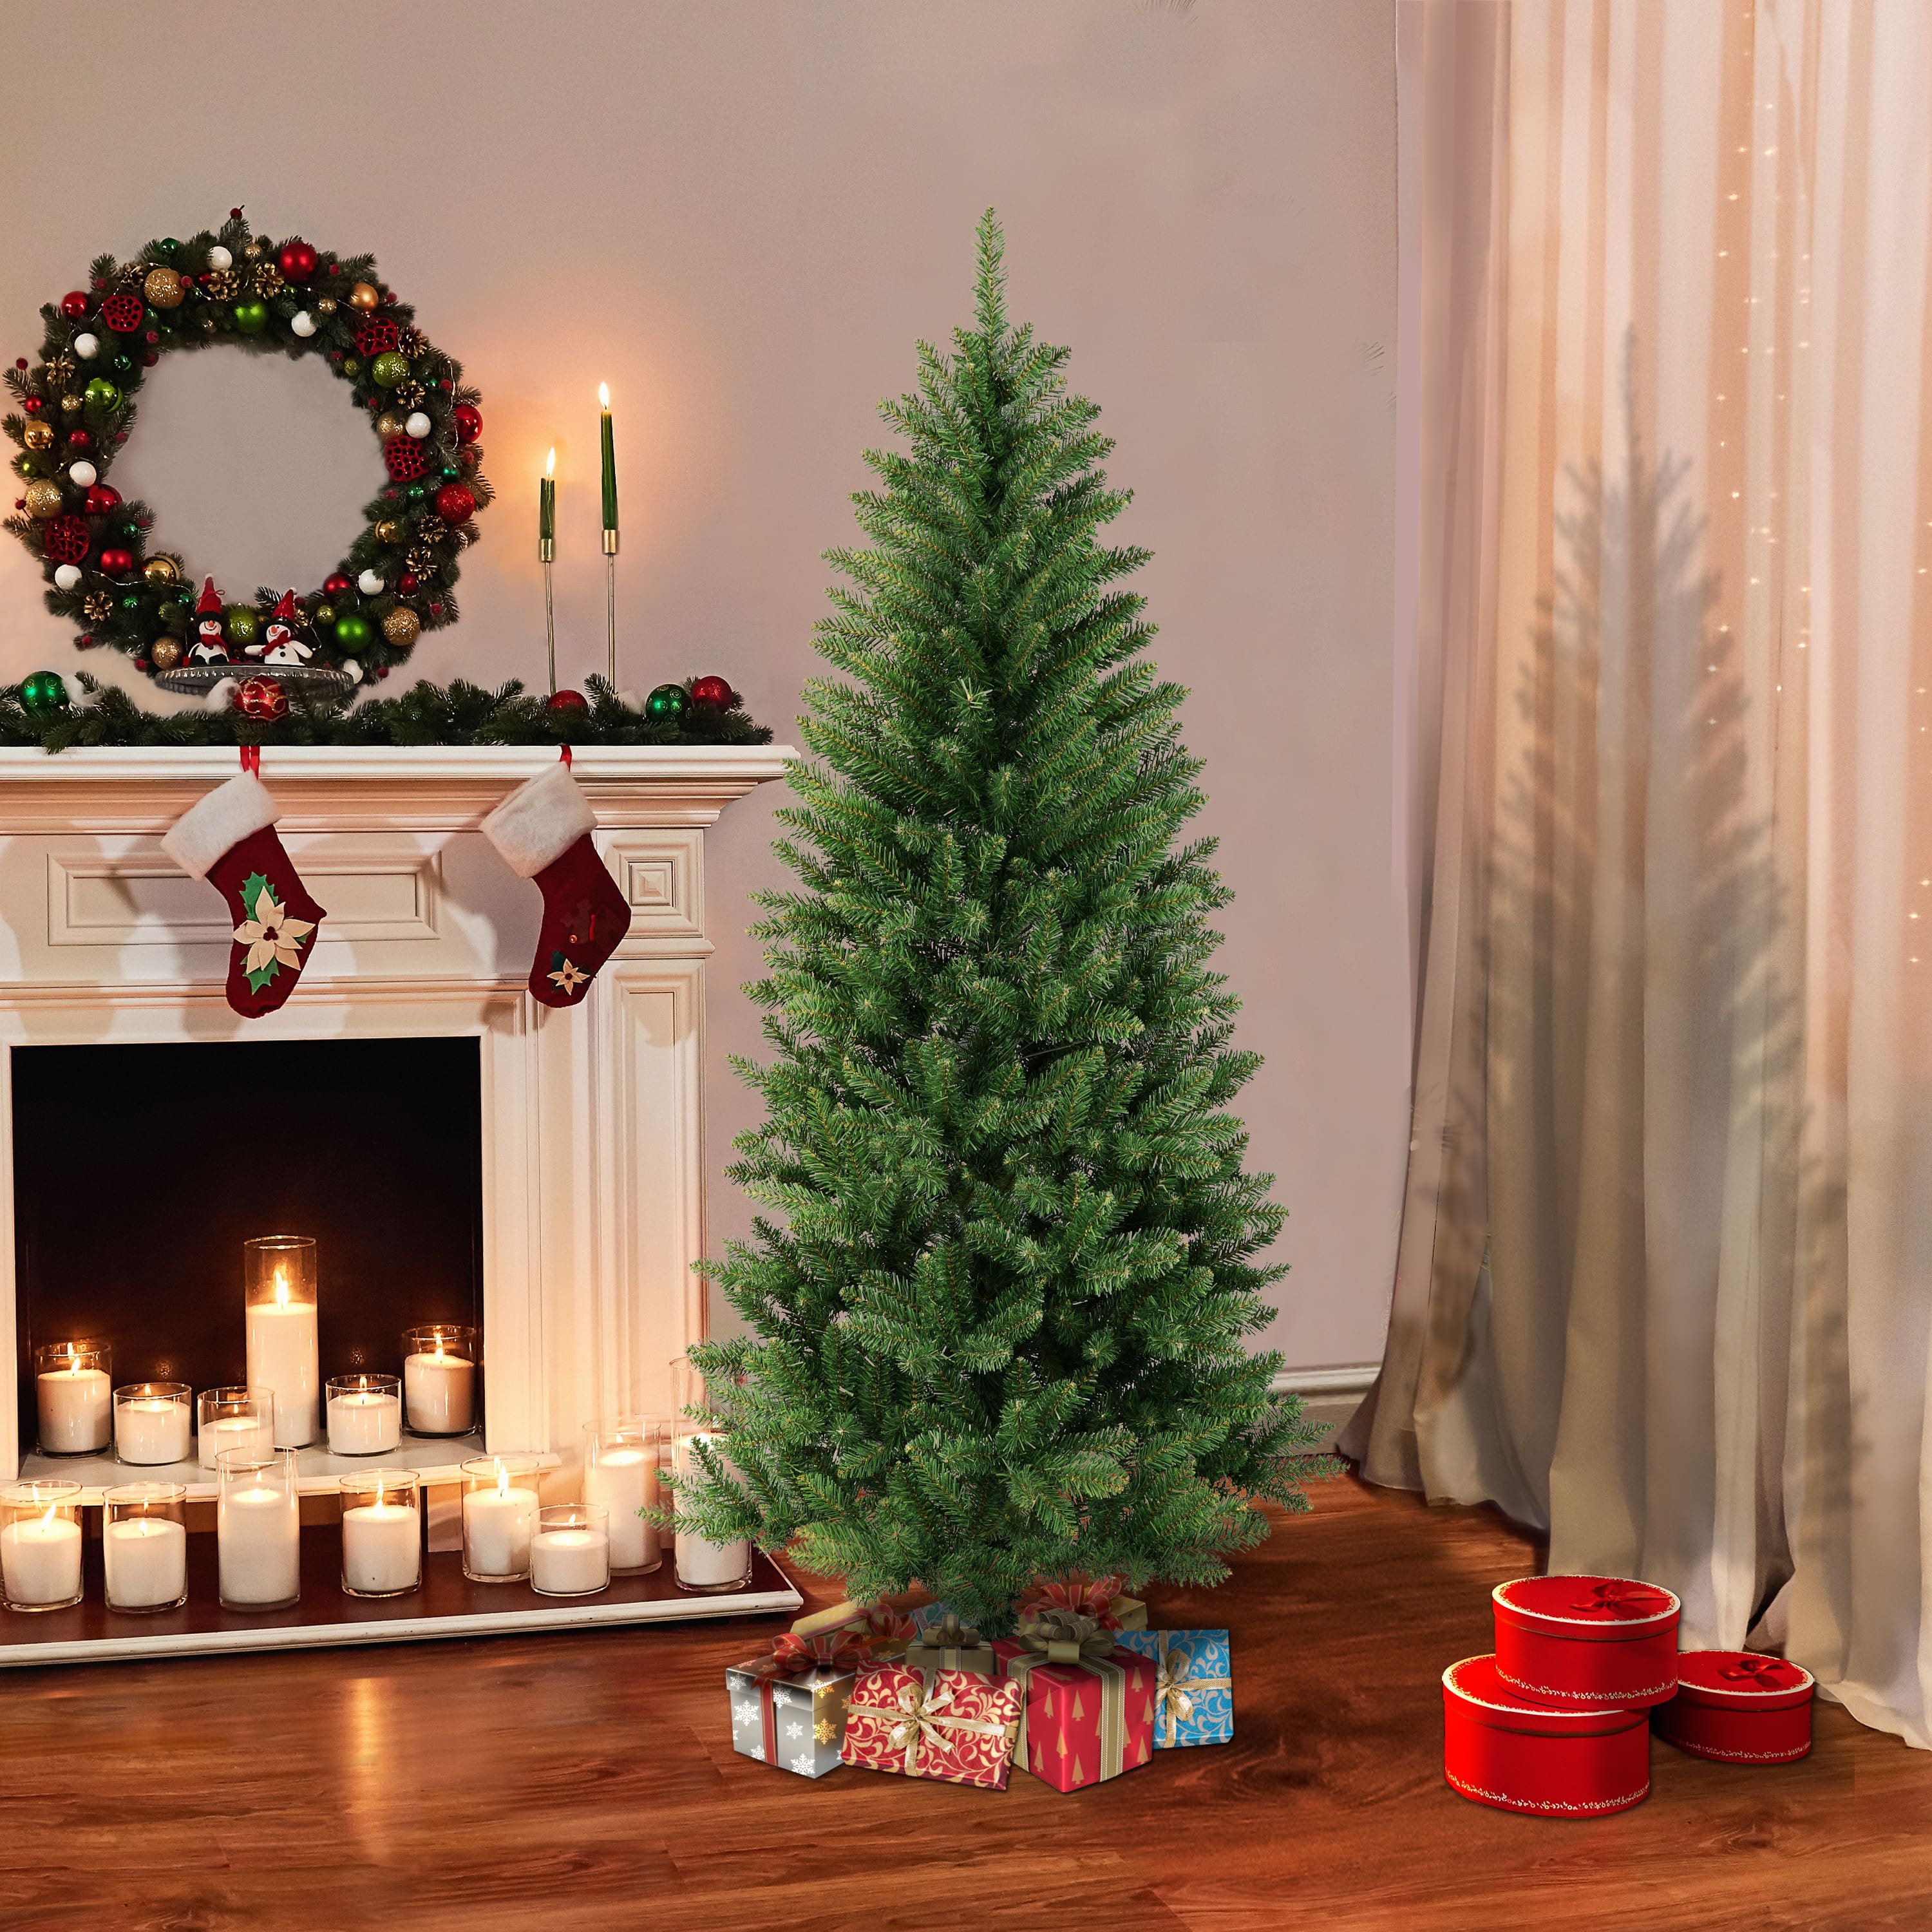 6ft. Carson Pine Artificial Christmas Tree